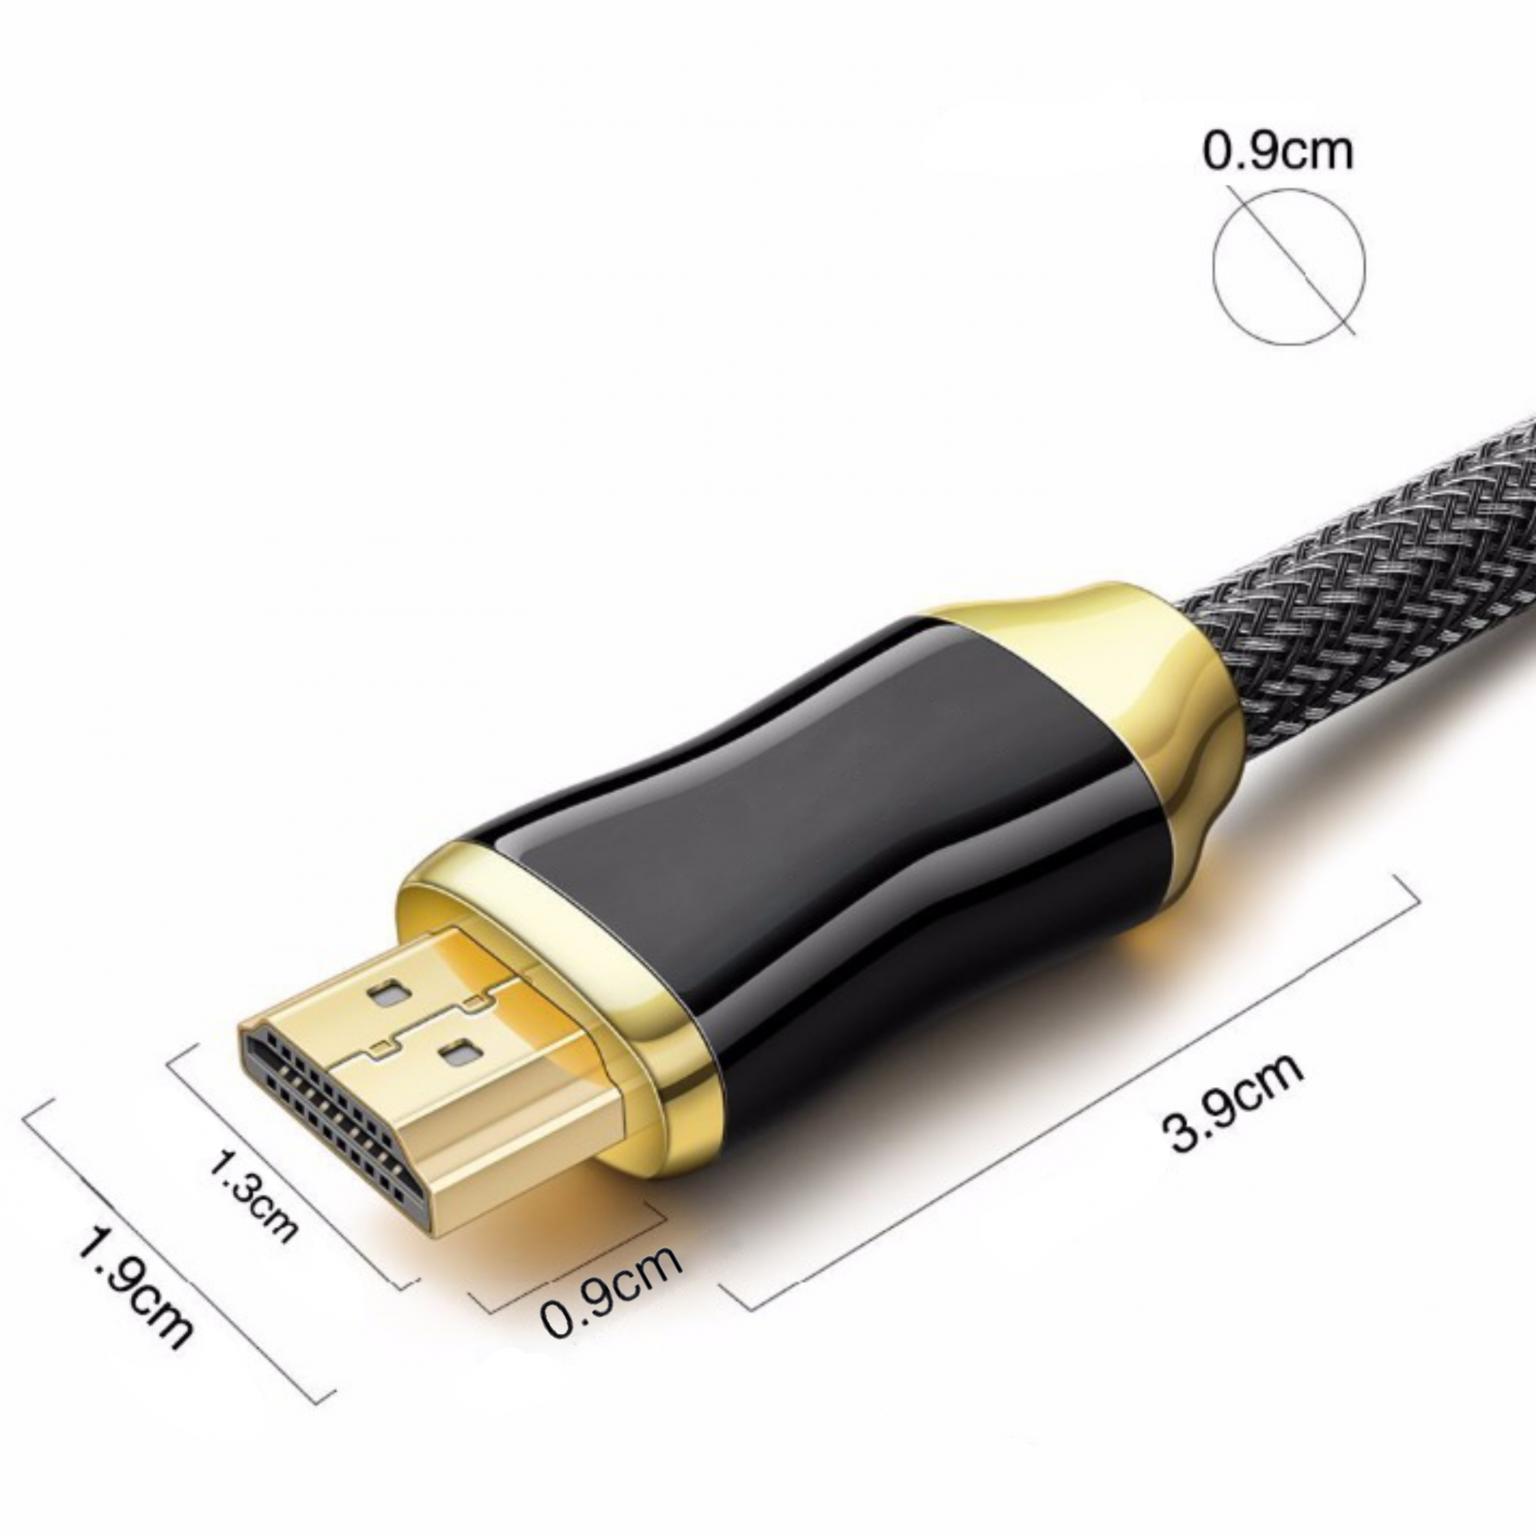 HDMI kabel - Allteq